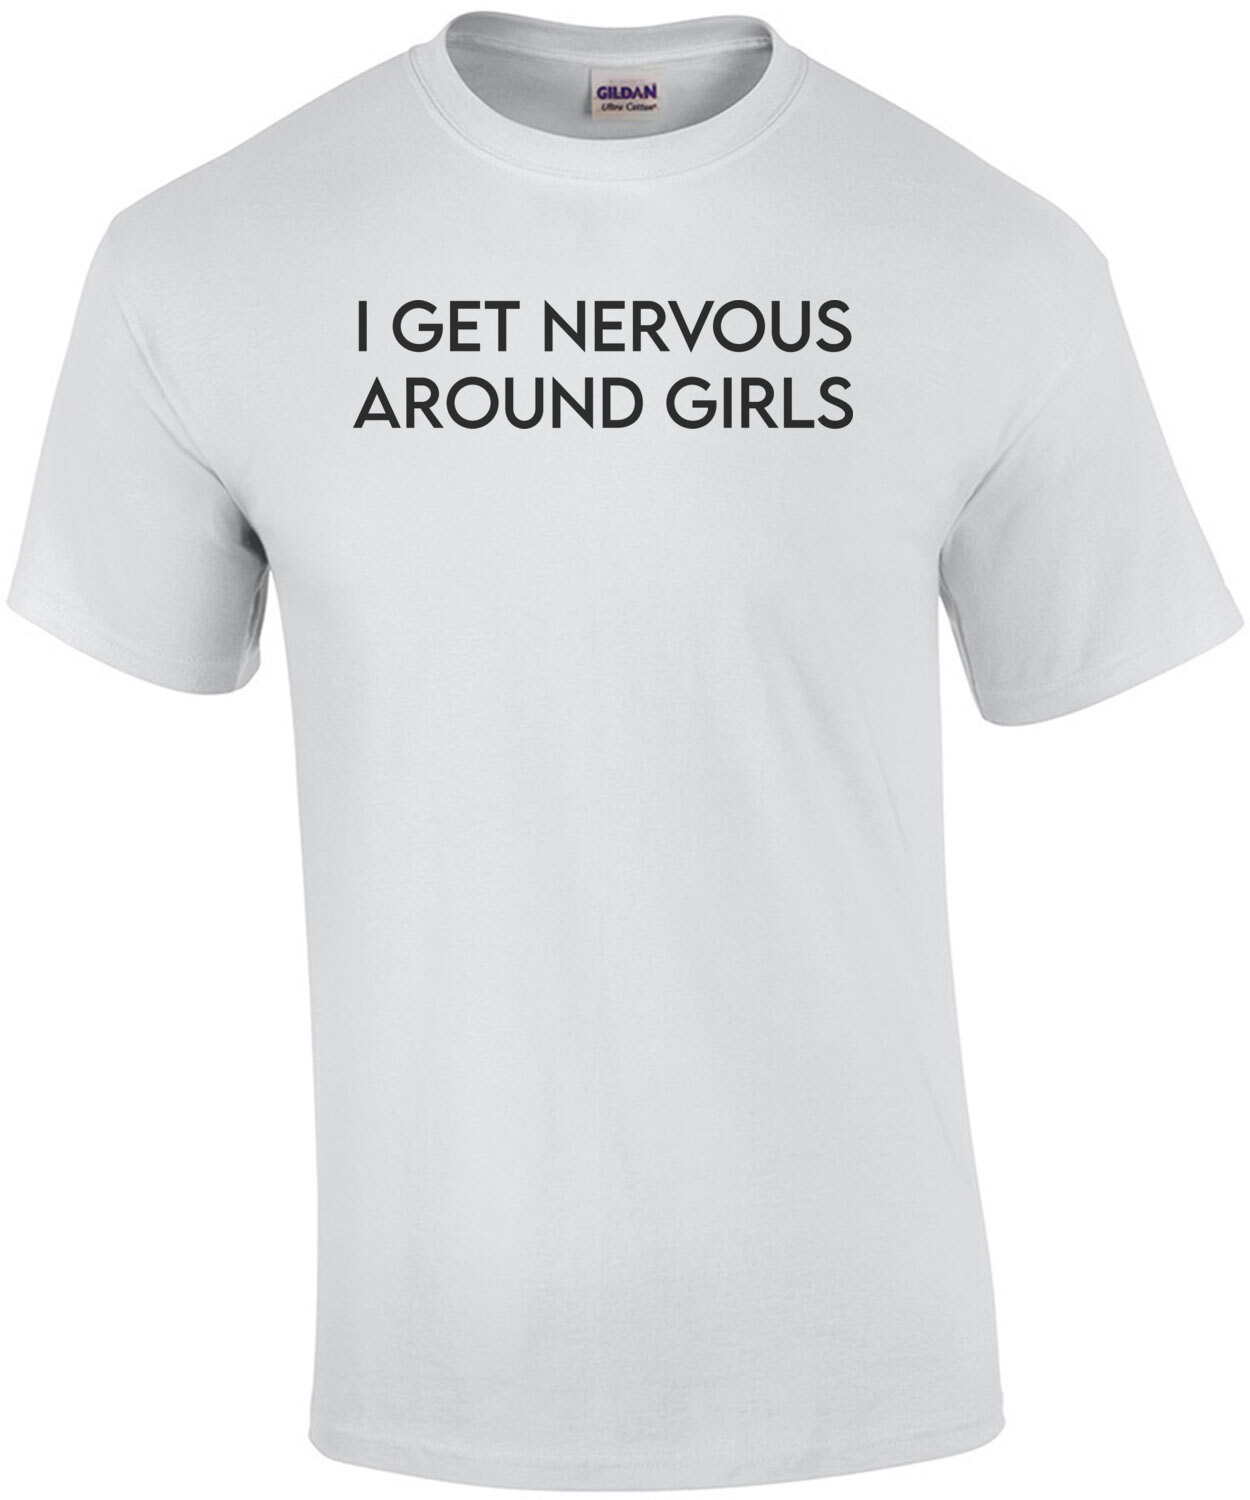 I Get Nervous Around Girls - Funny Shirt